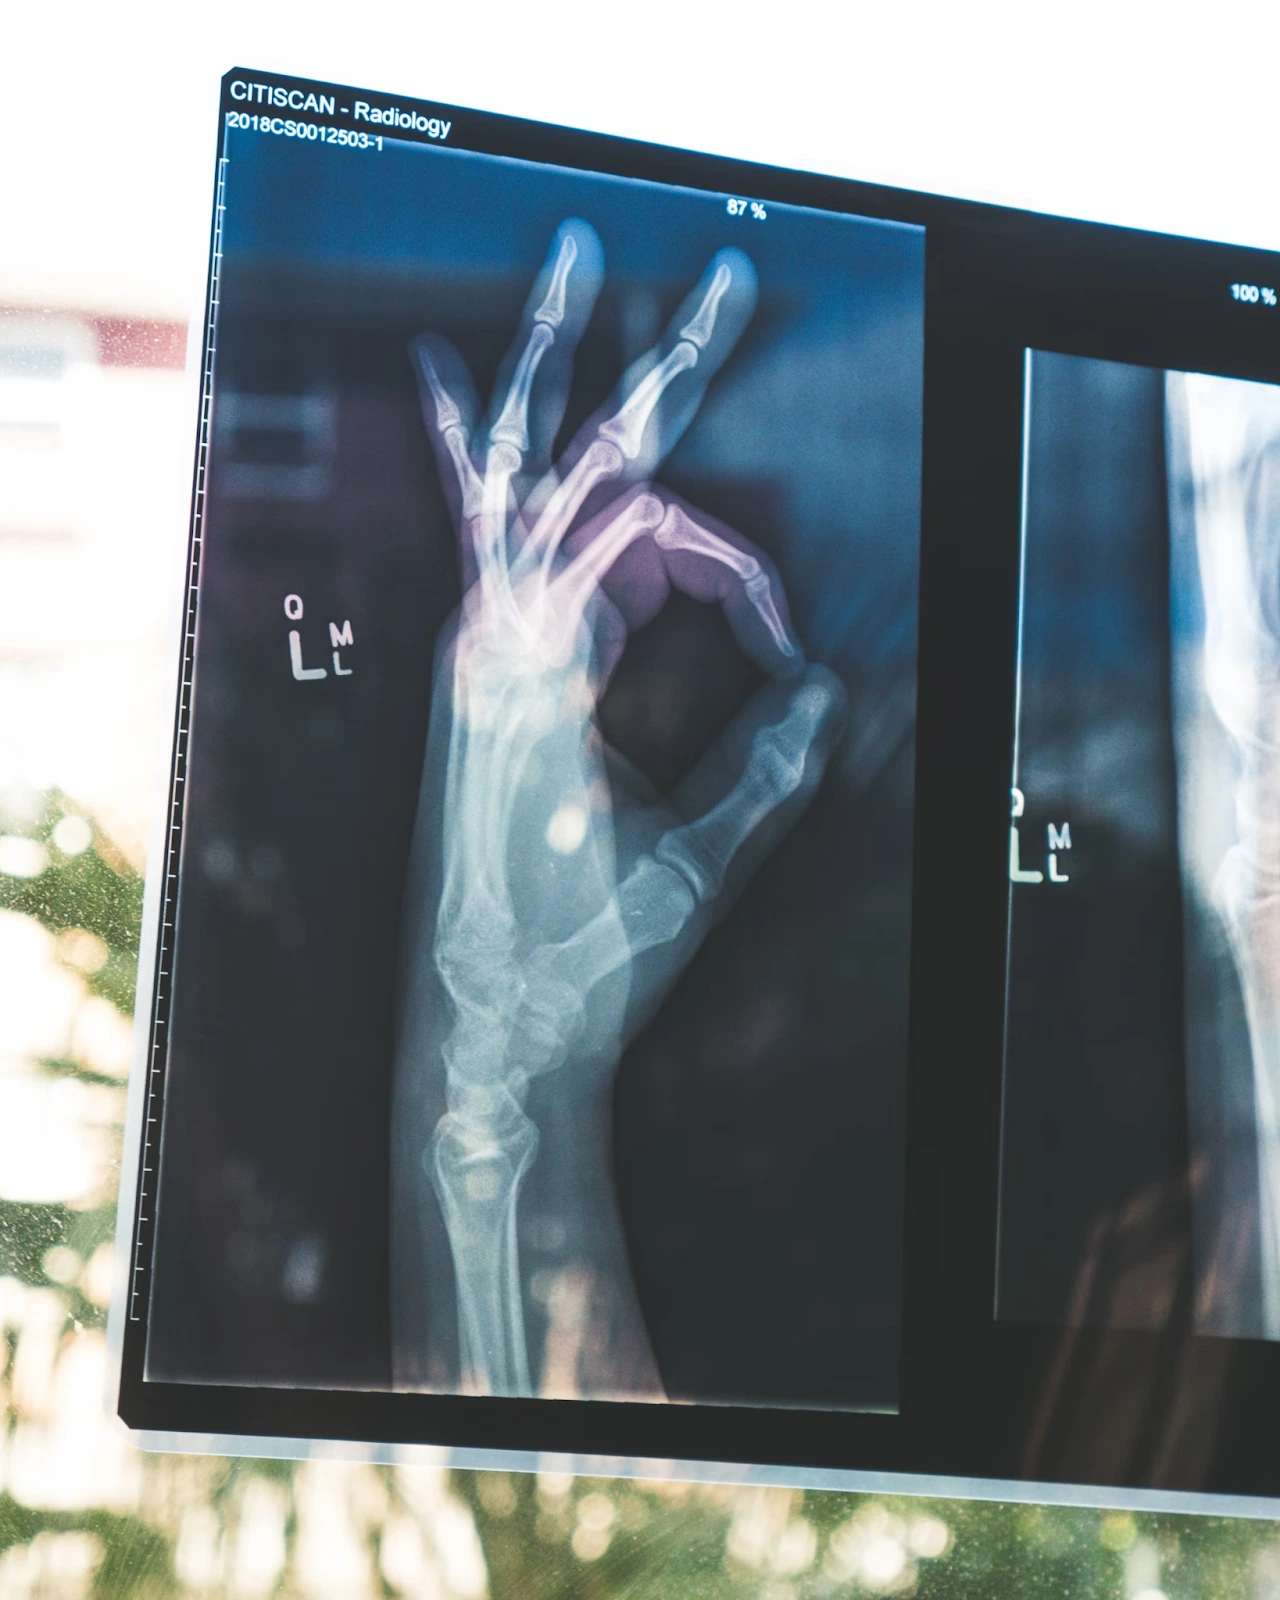 An X-ray of a hand having an OK hand gesture